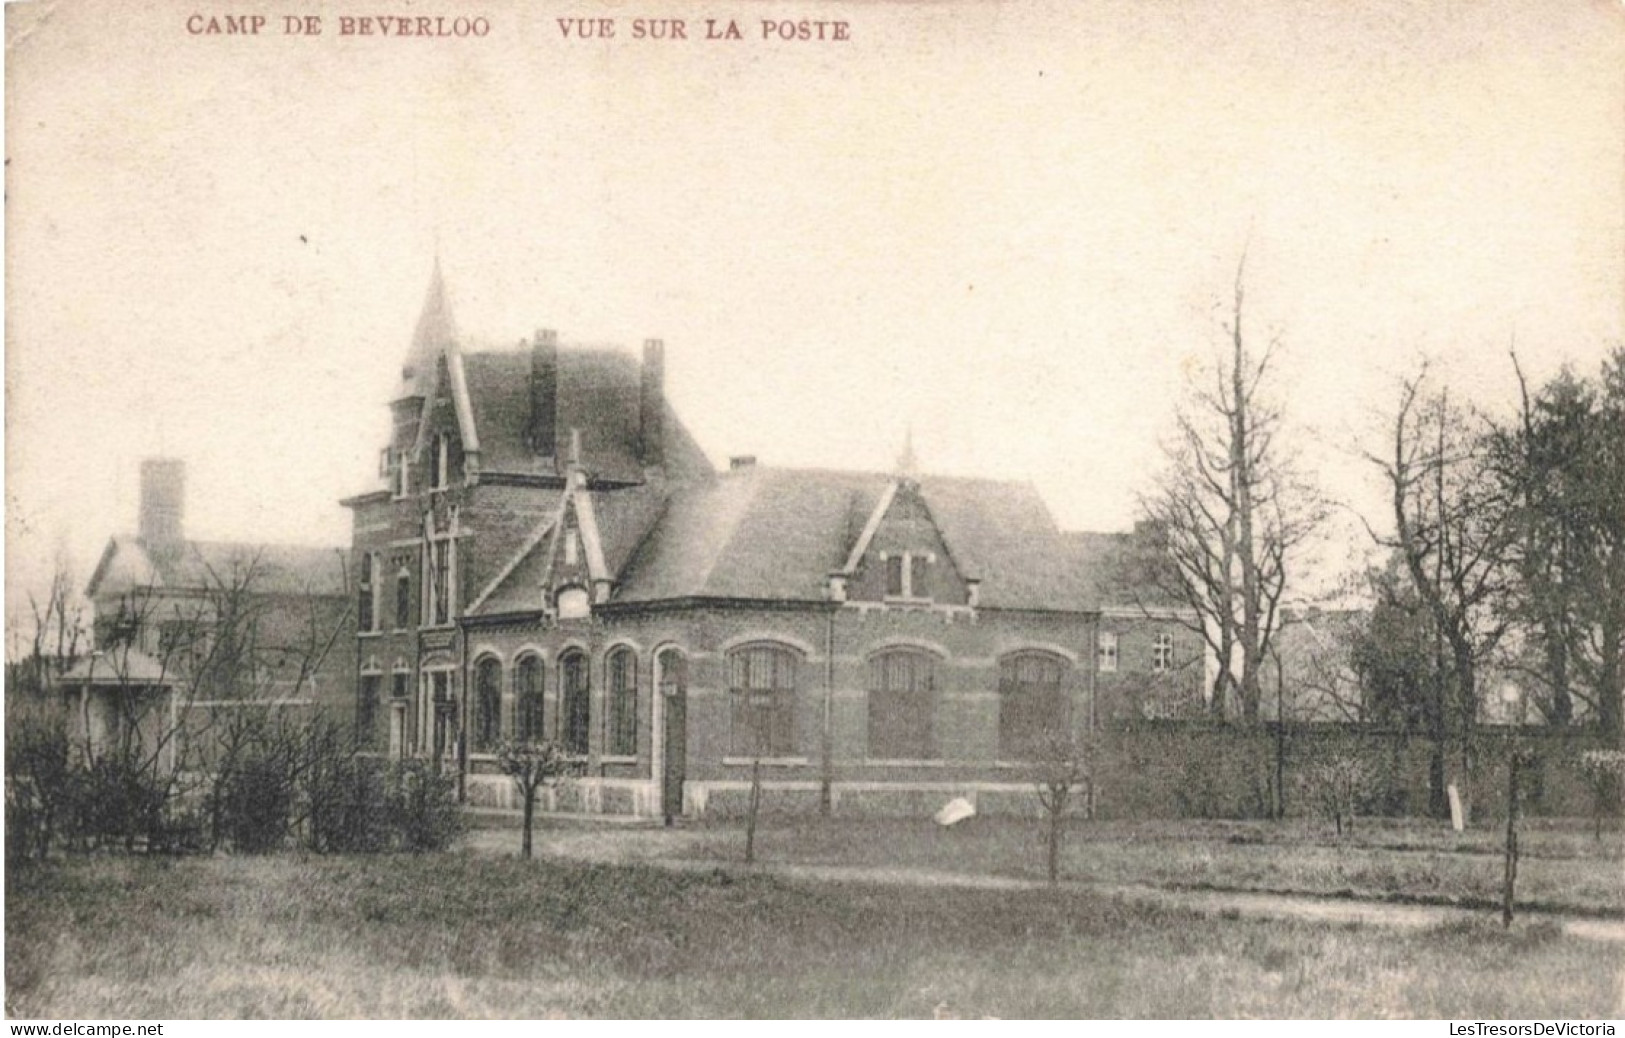 BELGIQUE - Camp De Beverloo - Vue Sur La Poste - Carte Postale Ancienne - Beringen